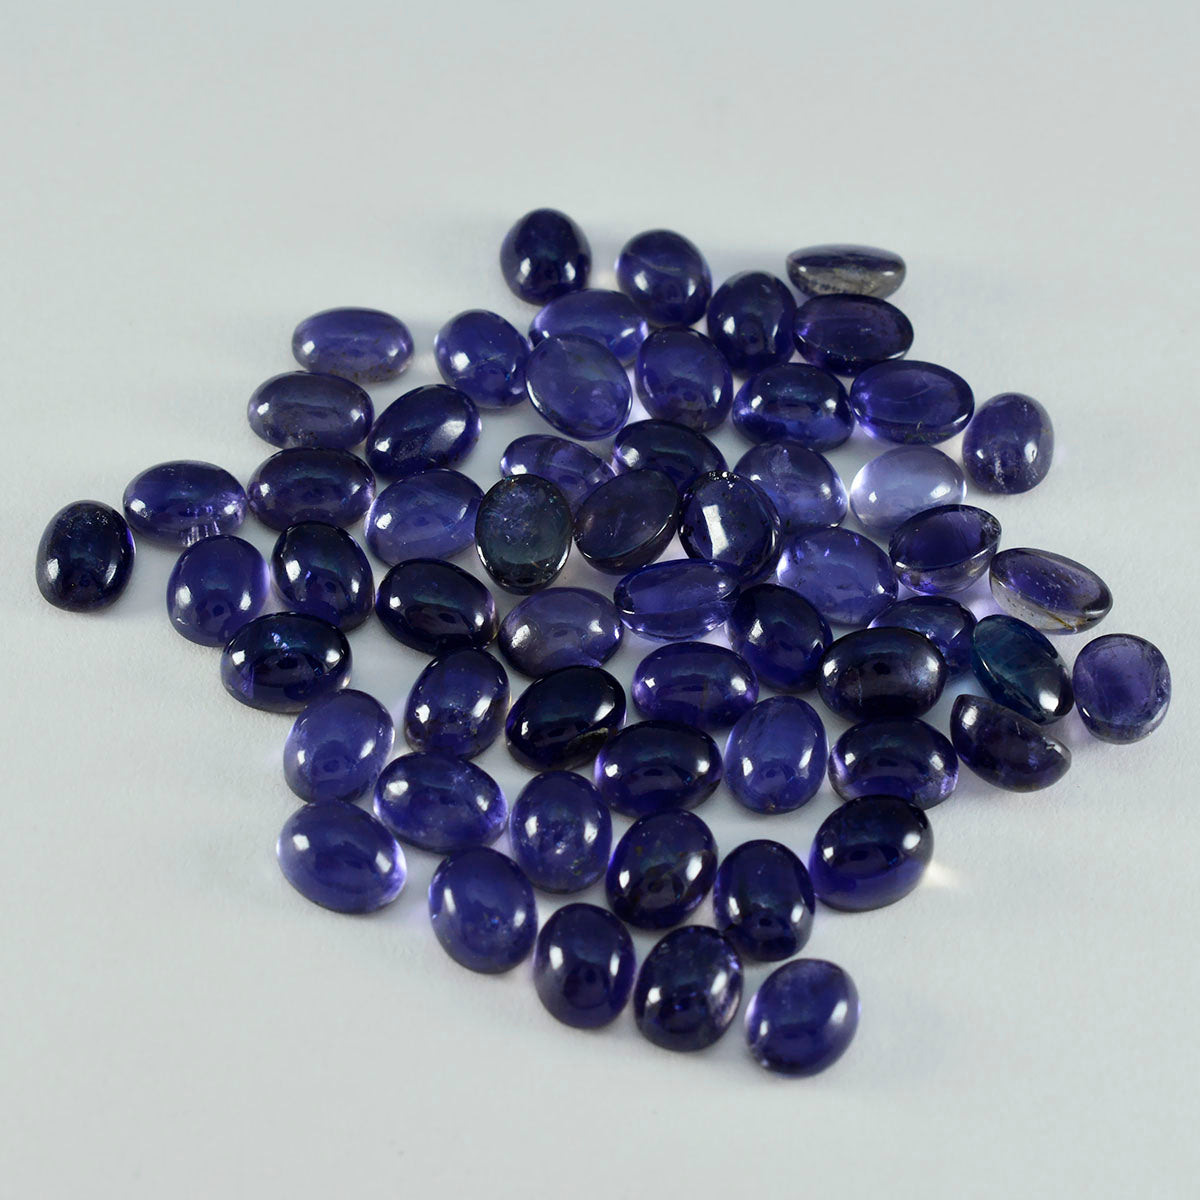 riyogems 1st blå iolit cabochon 4x6 mm oval form snygg kvalitetspärla